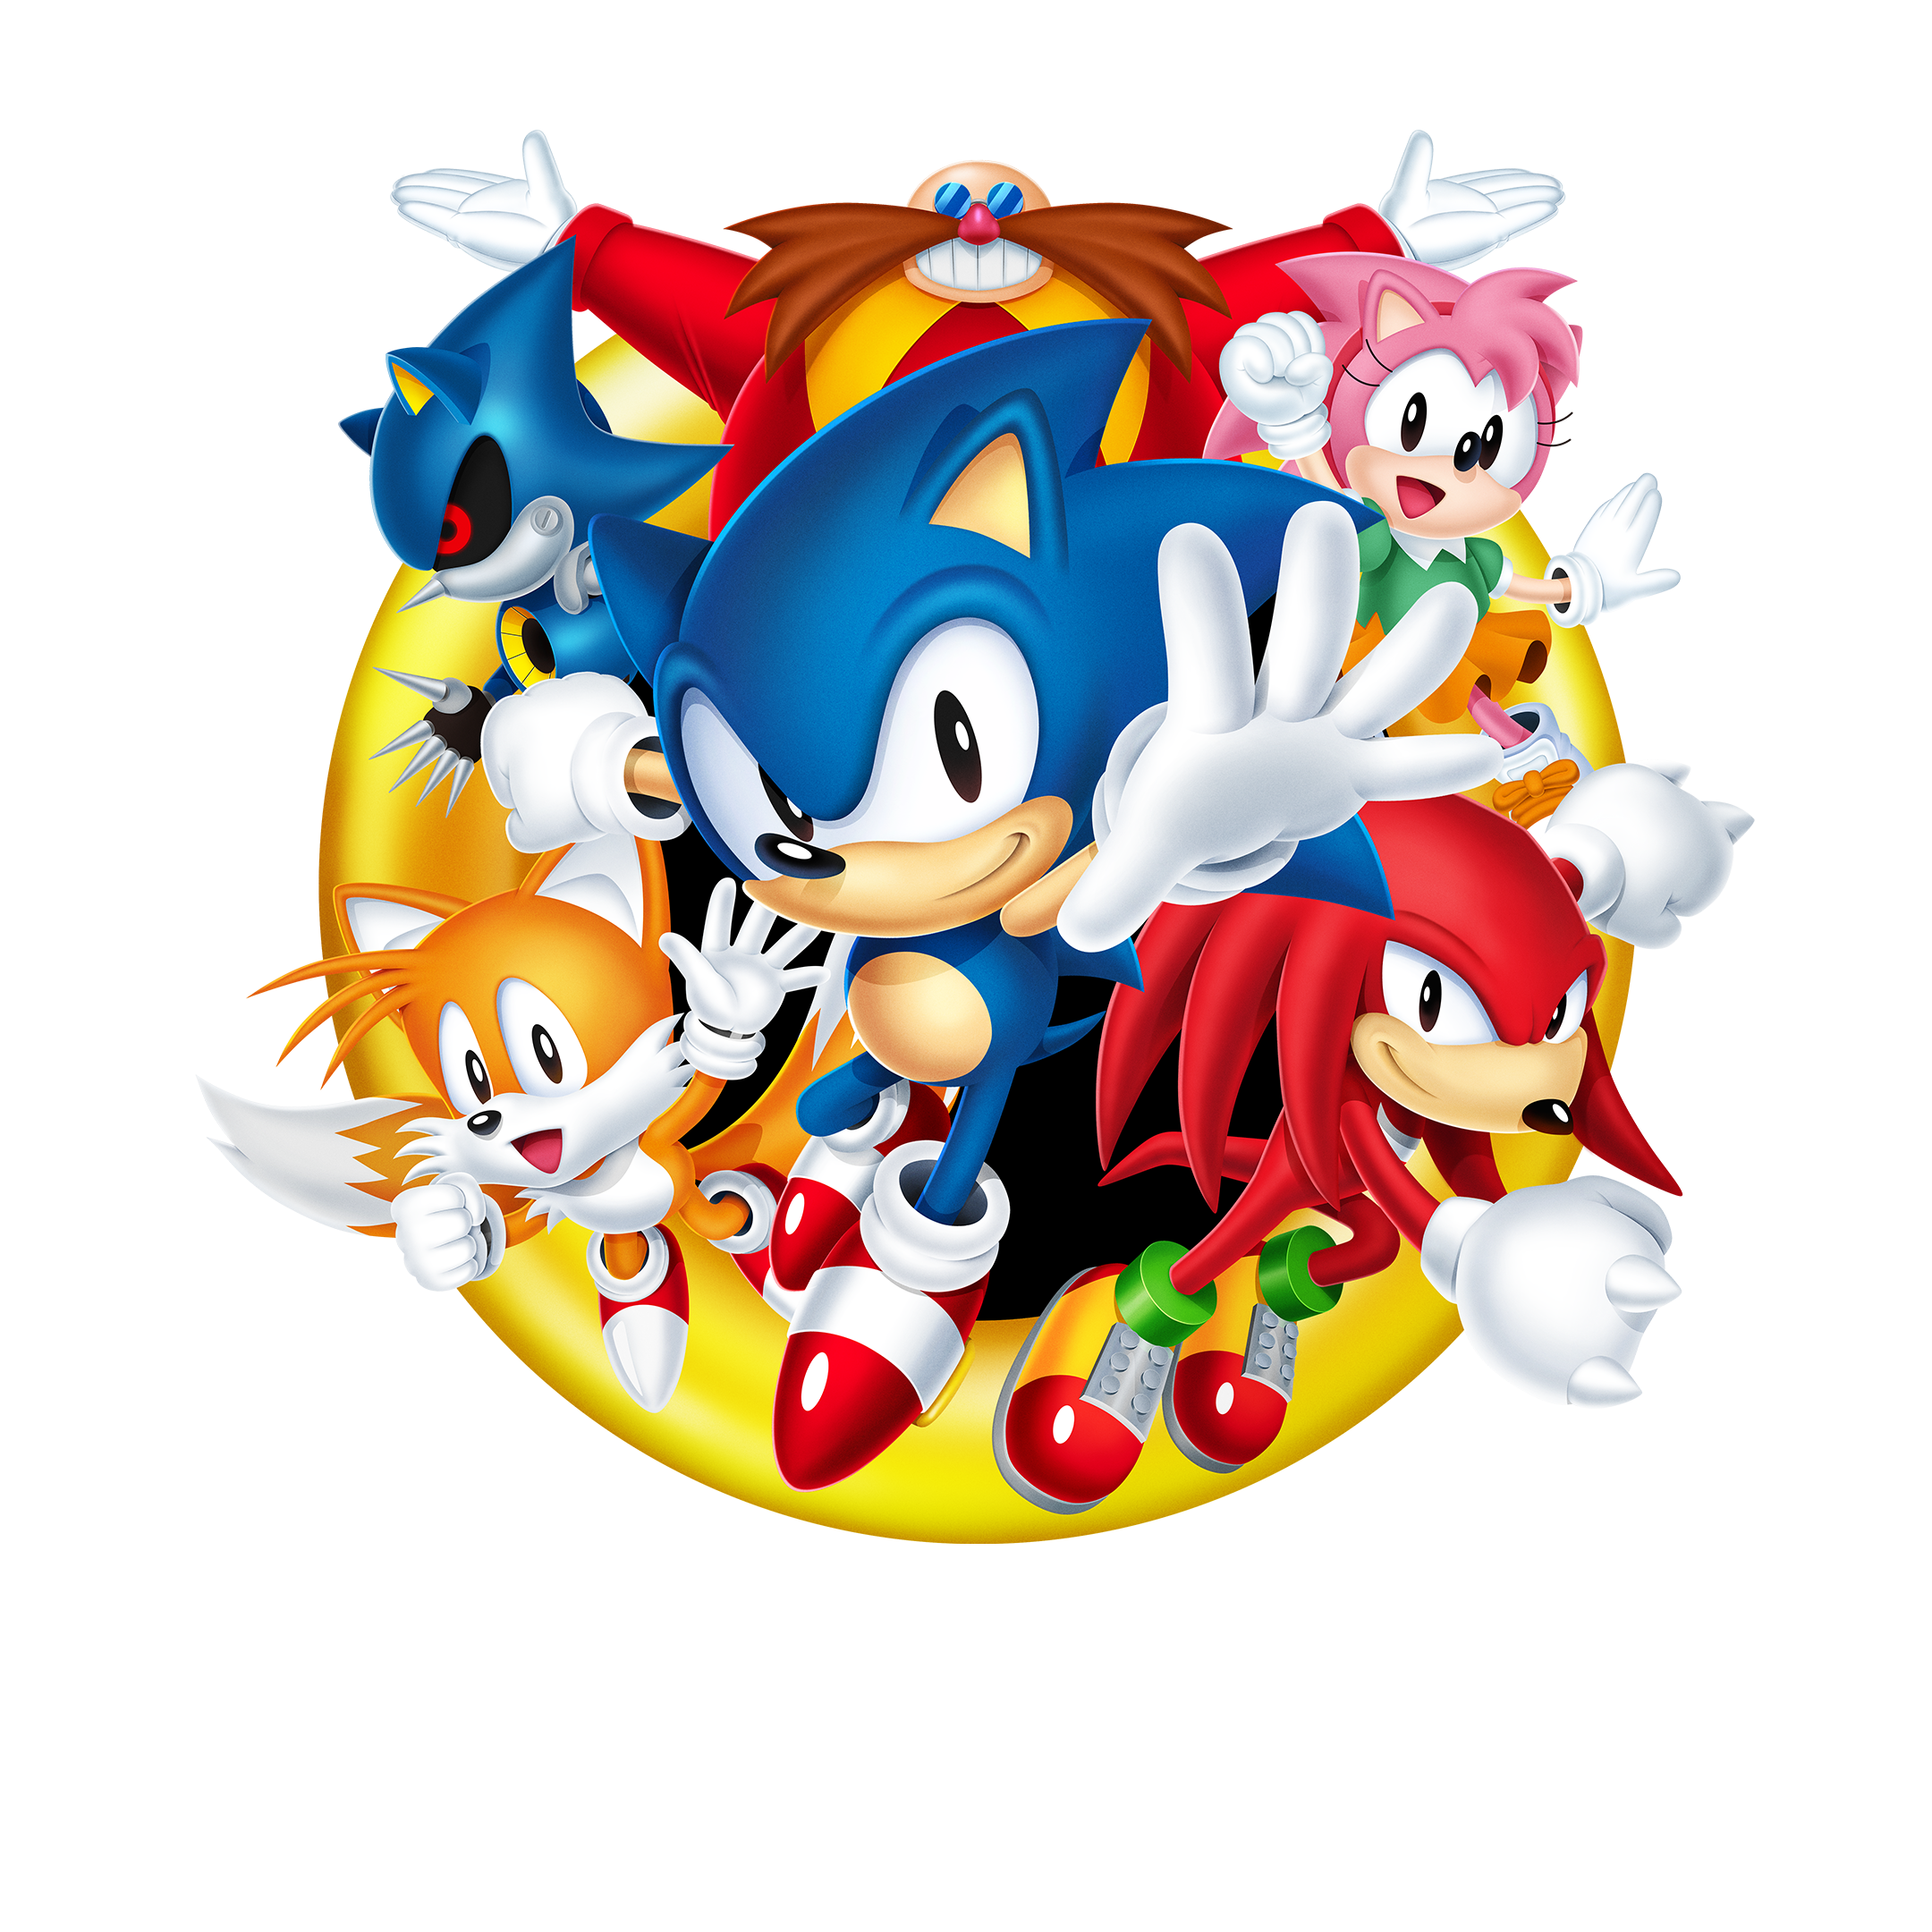 Combo Sonic Origins Plus + Sonic Superstars Ps5 Physical Media